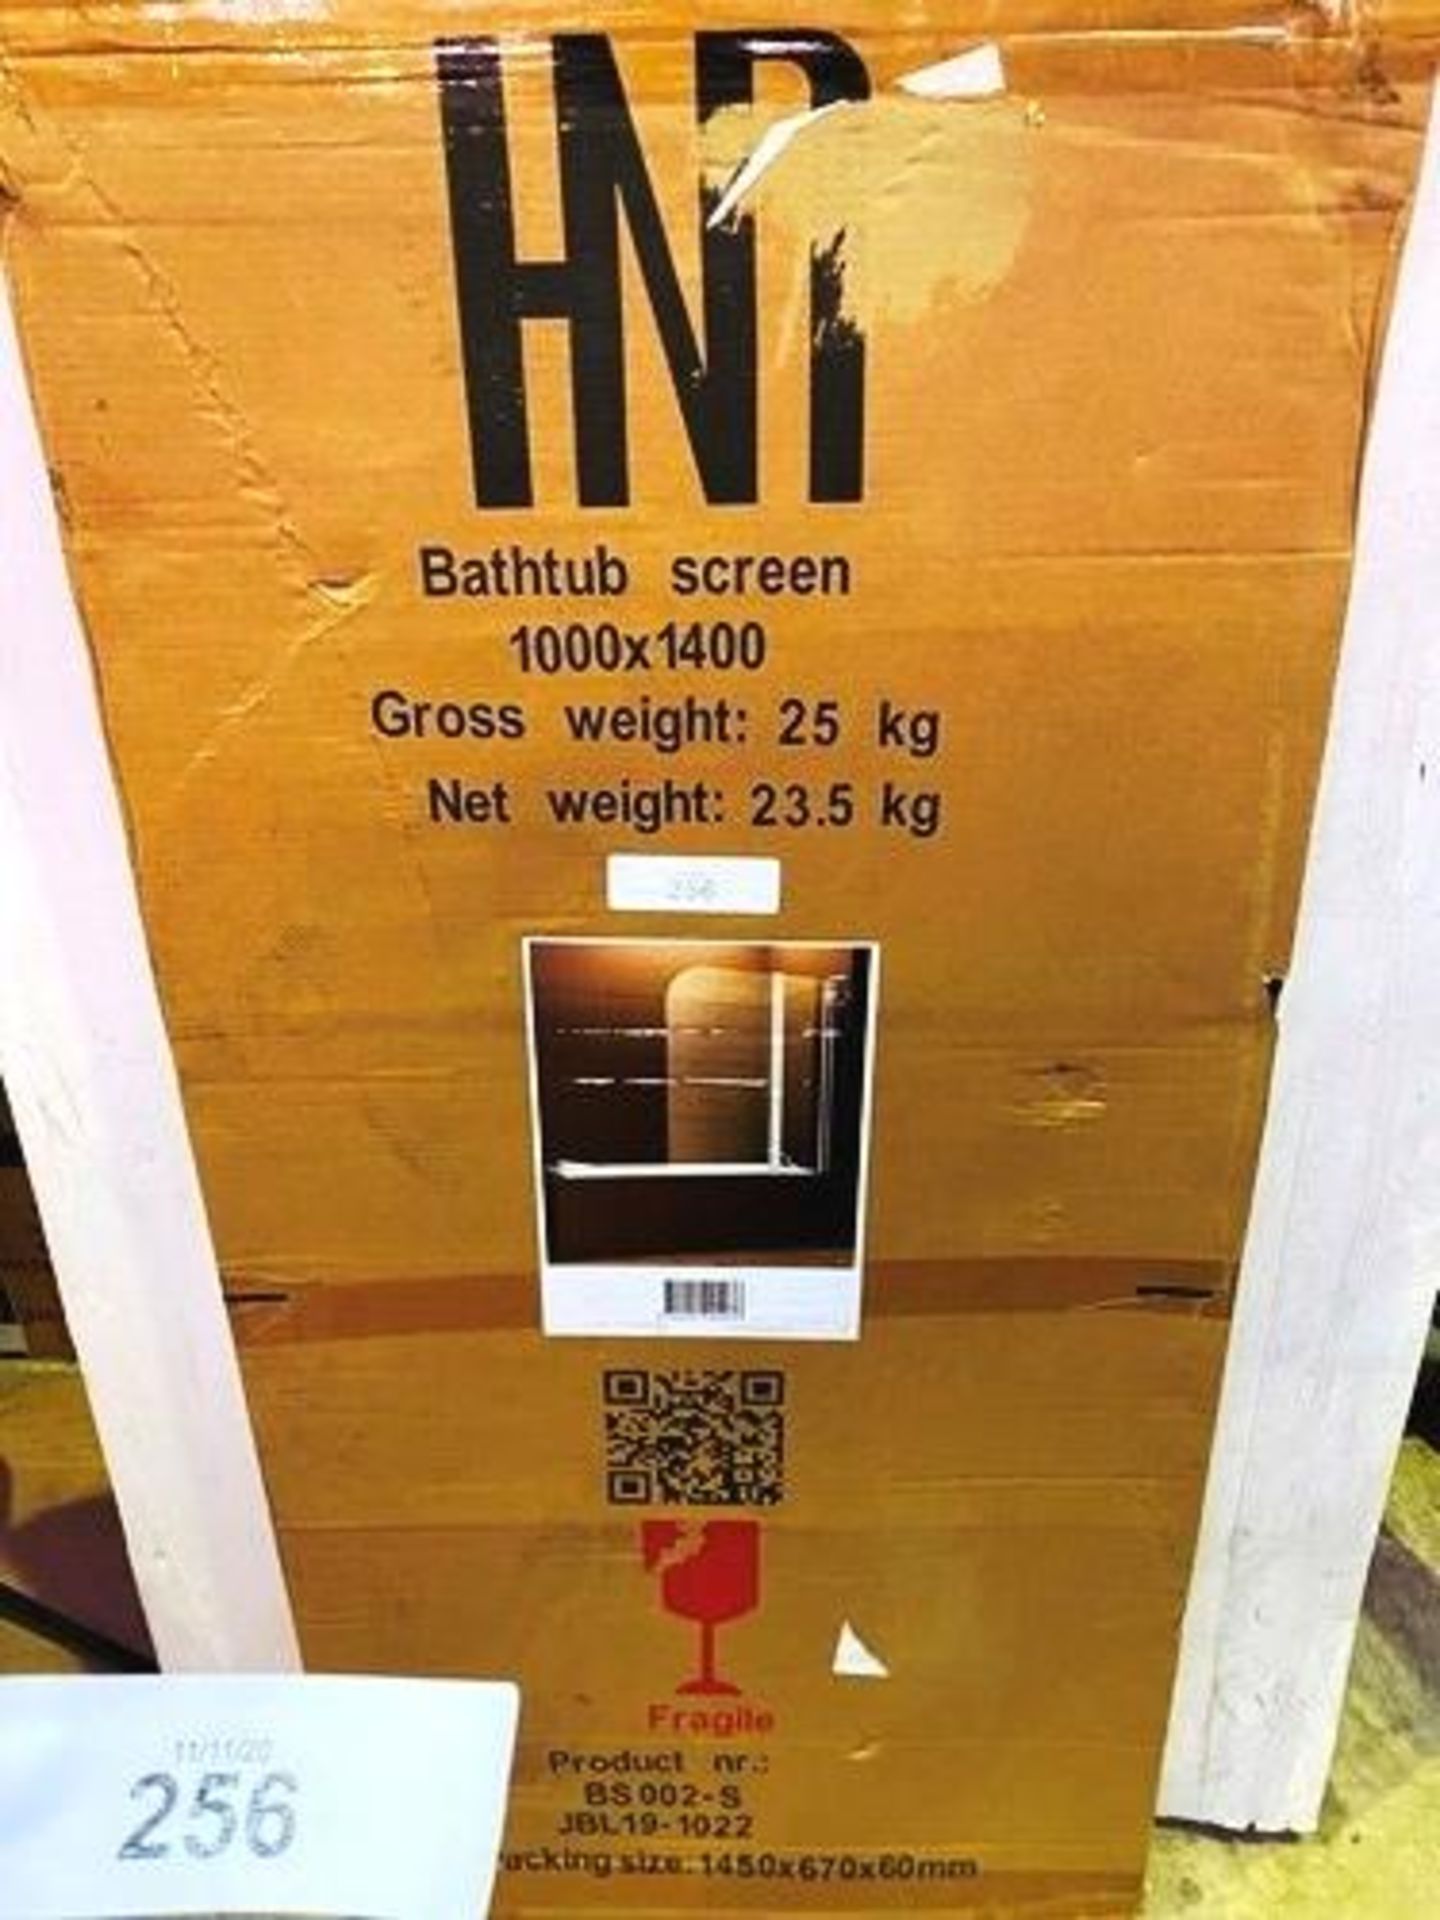 1 x HNR 1000 x 1400mm bathtub screen, model JBL19-1022 - sealed new in box (EB1)